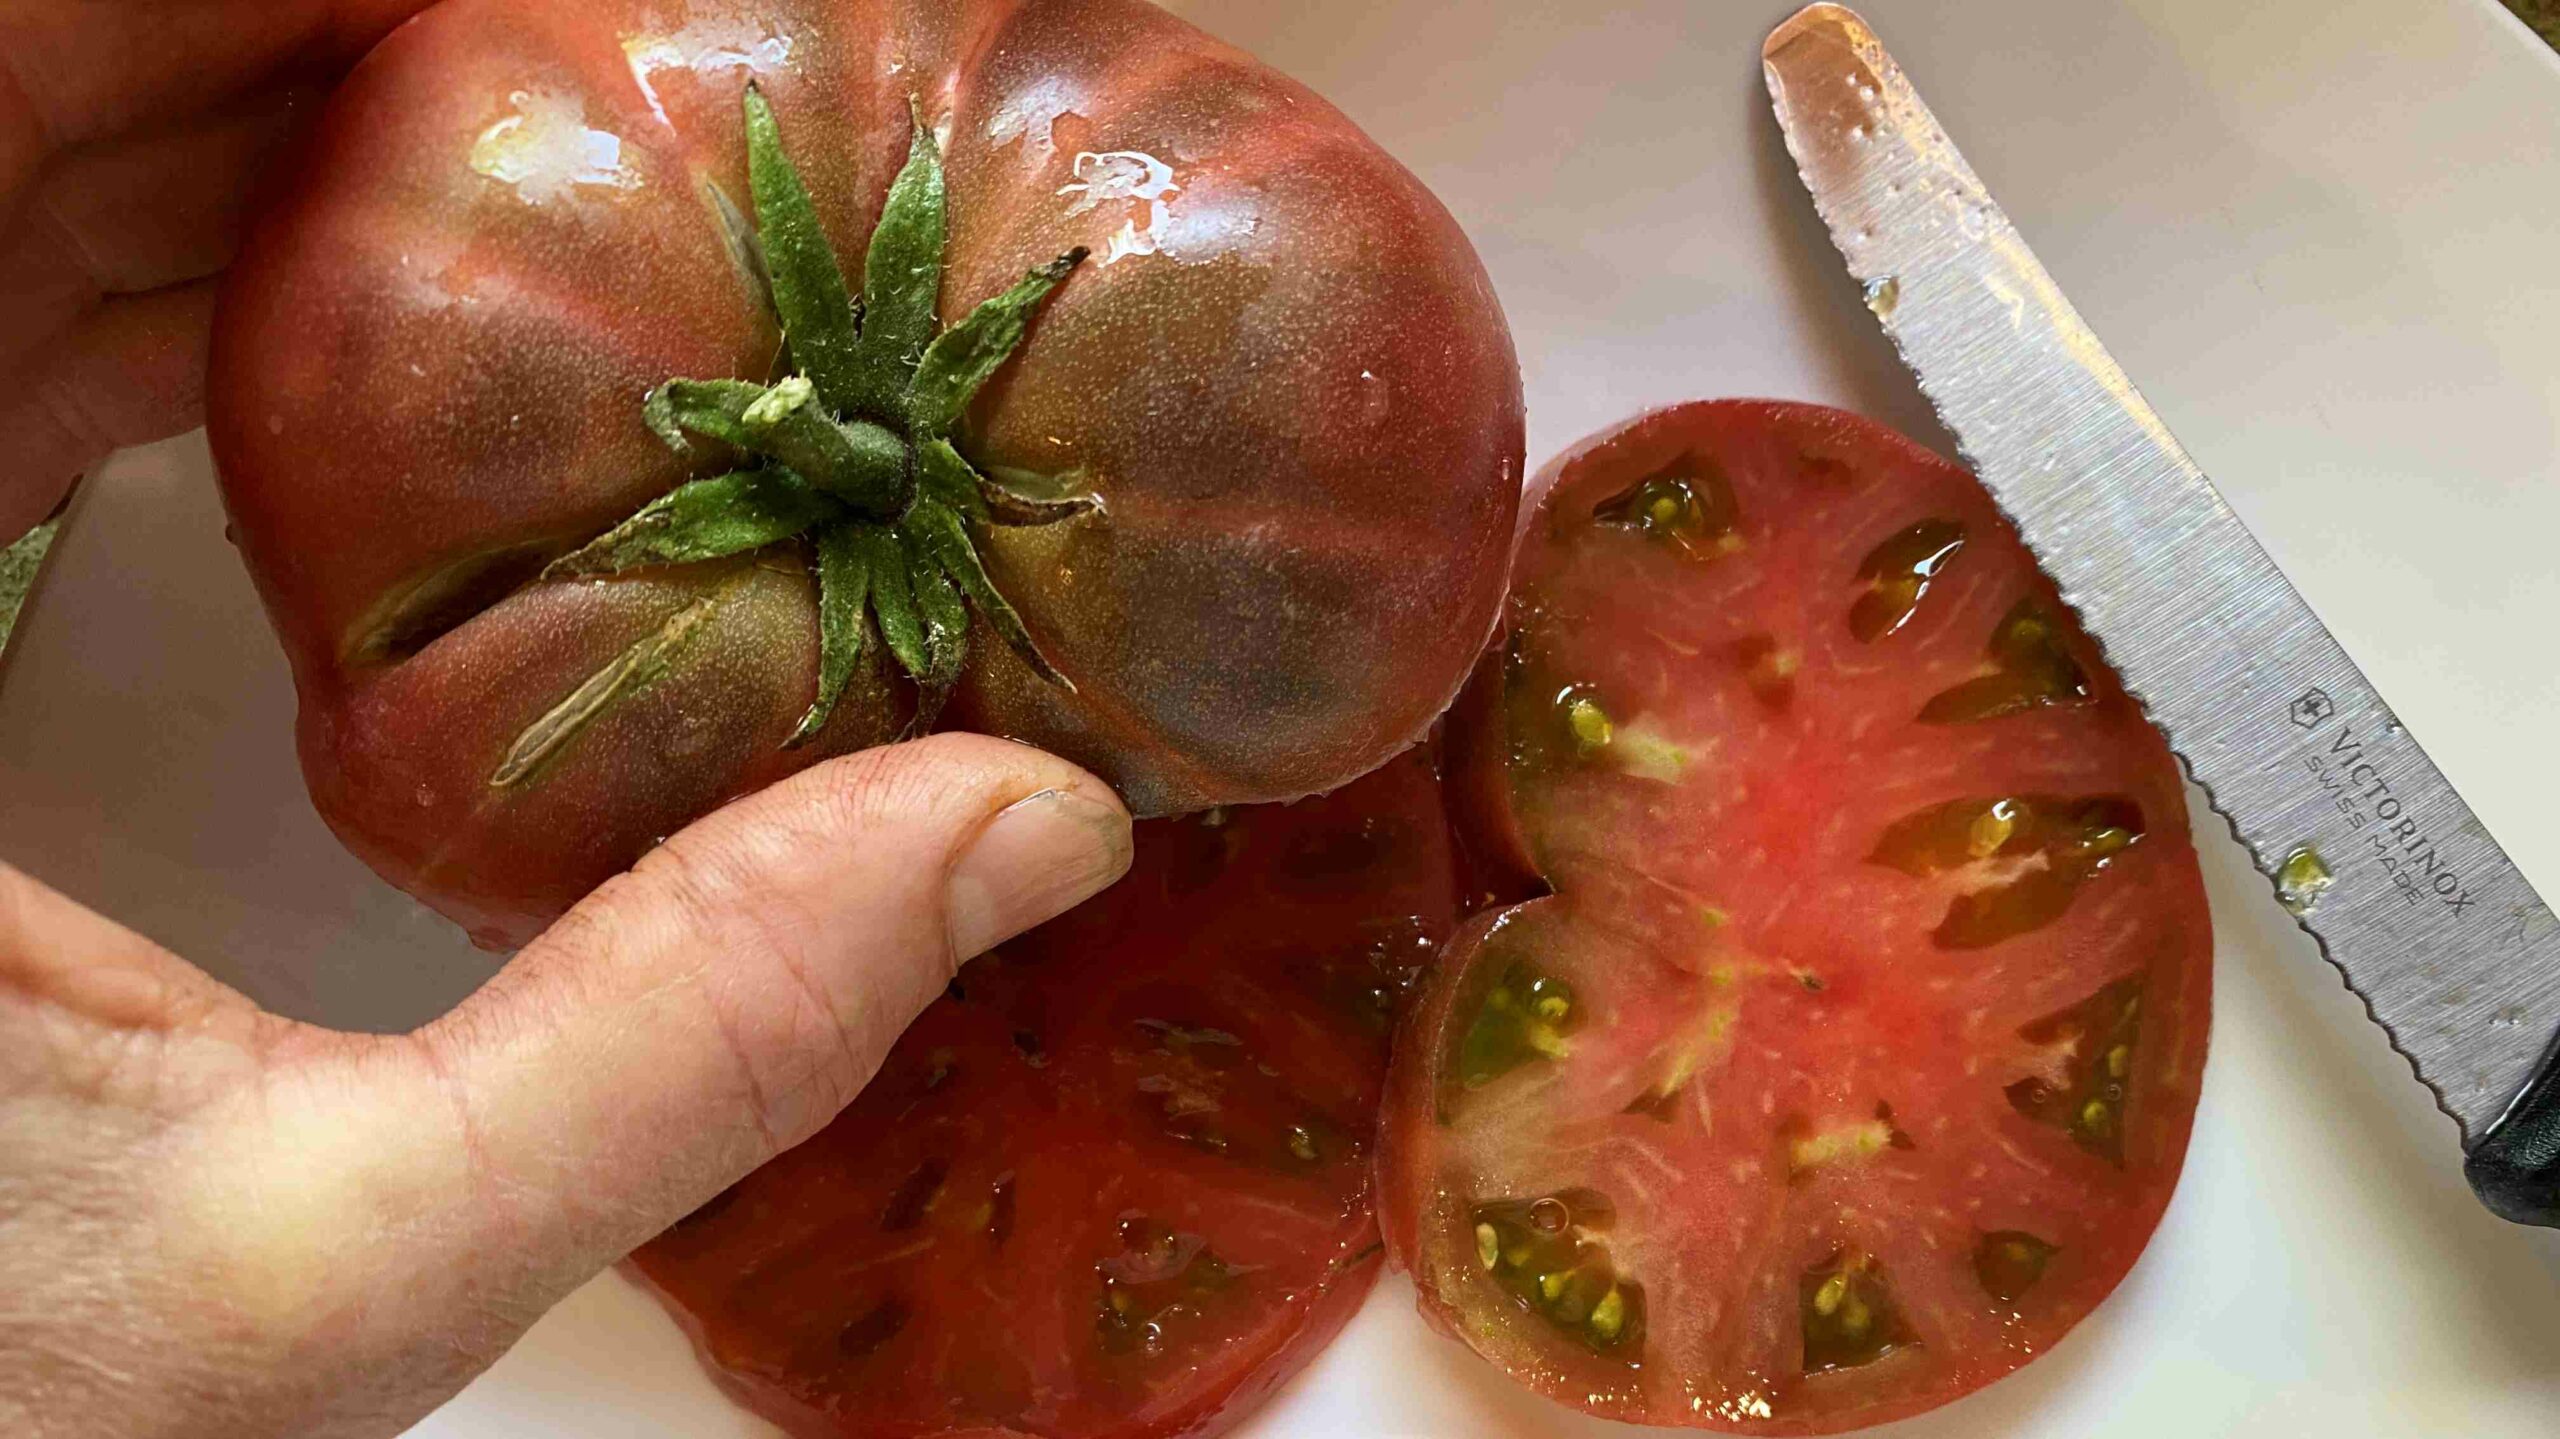 Wild Fred dwarf tomato project